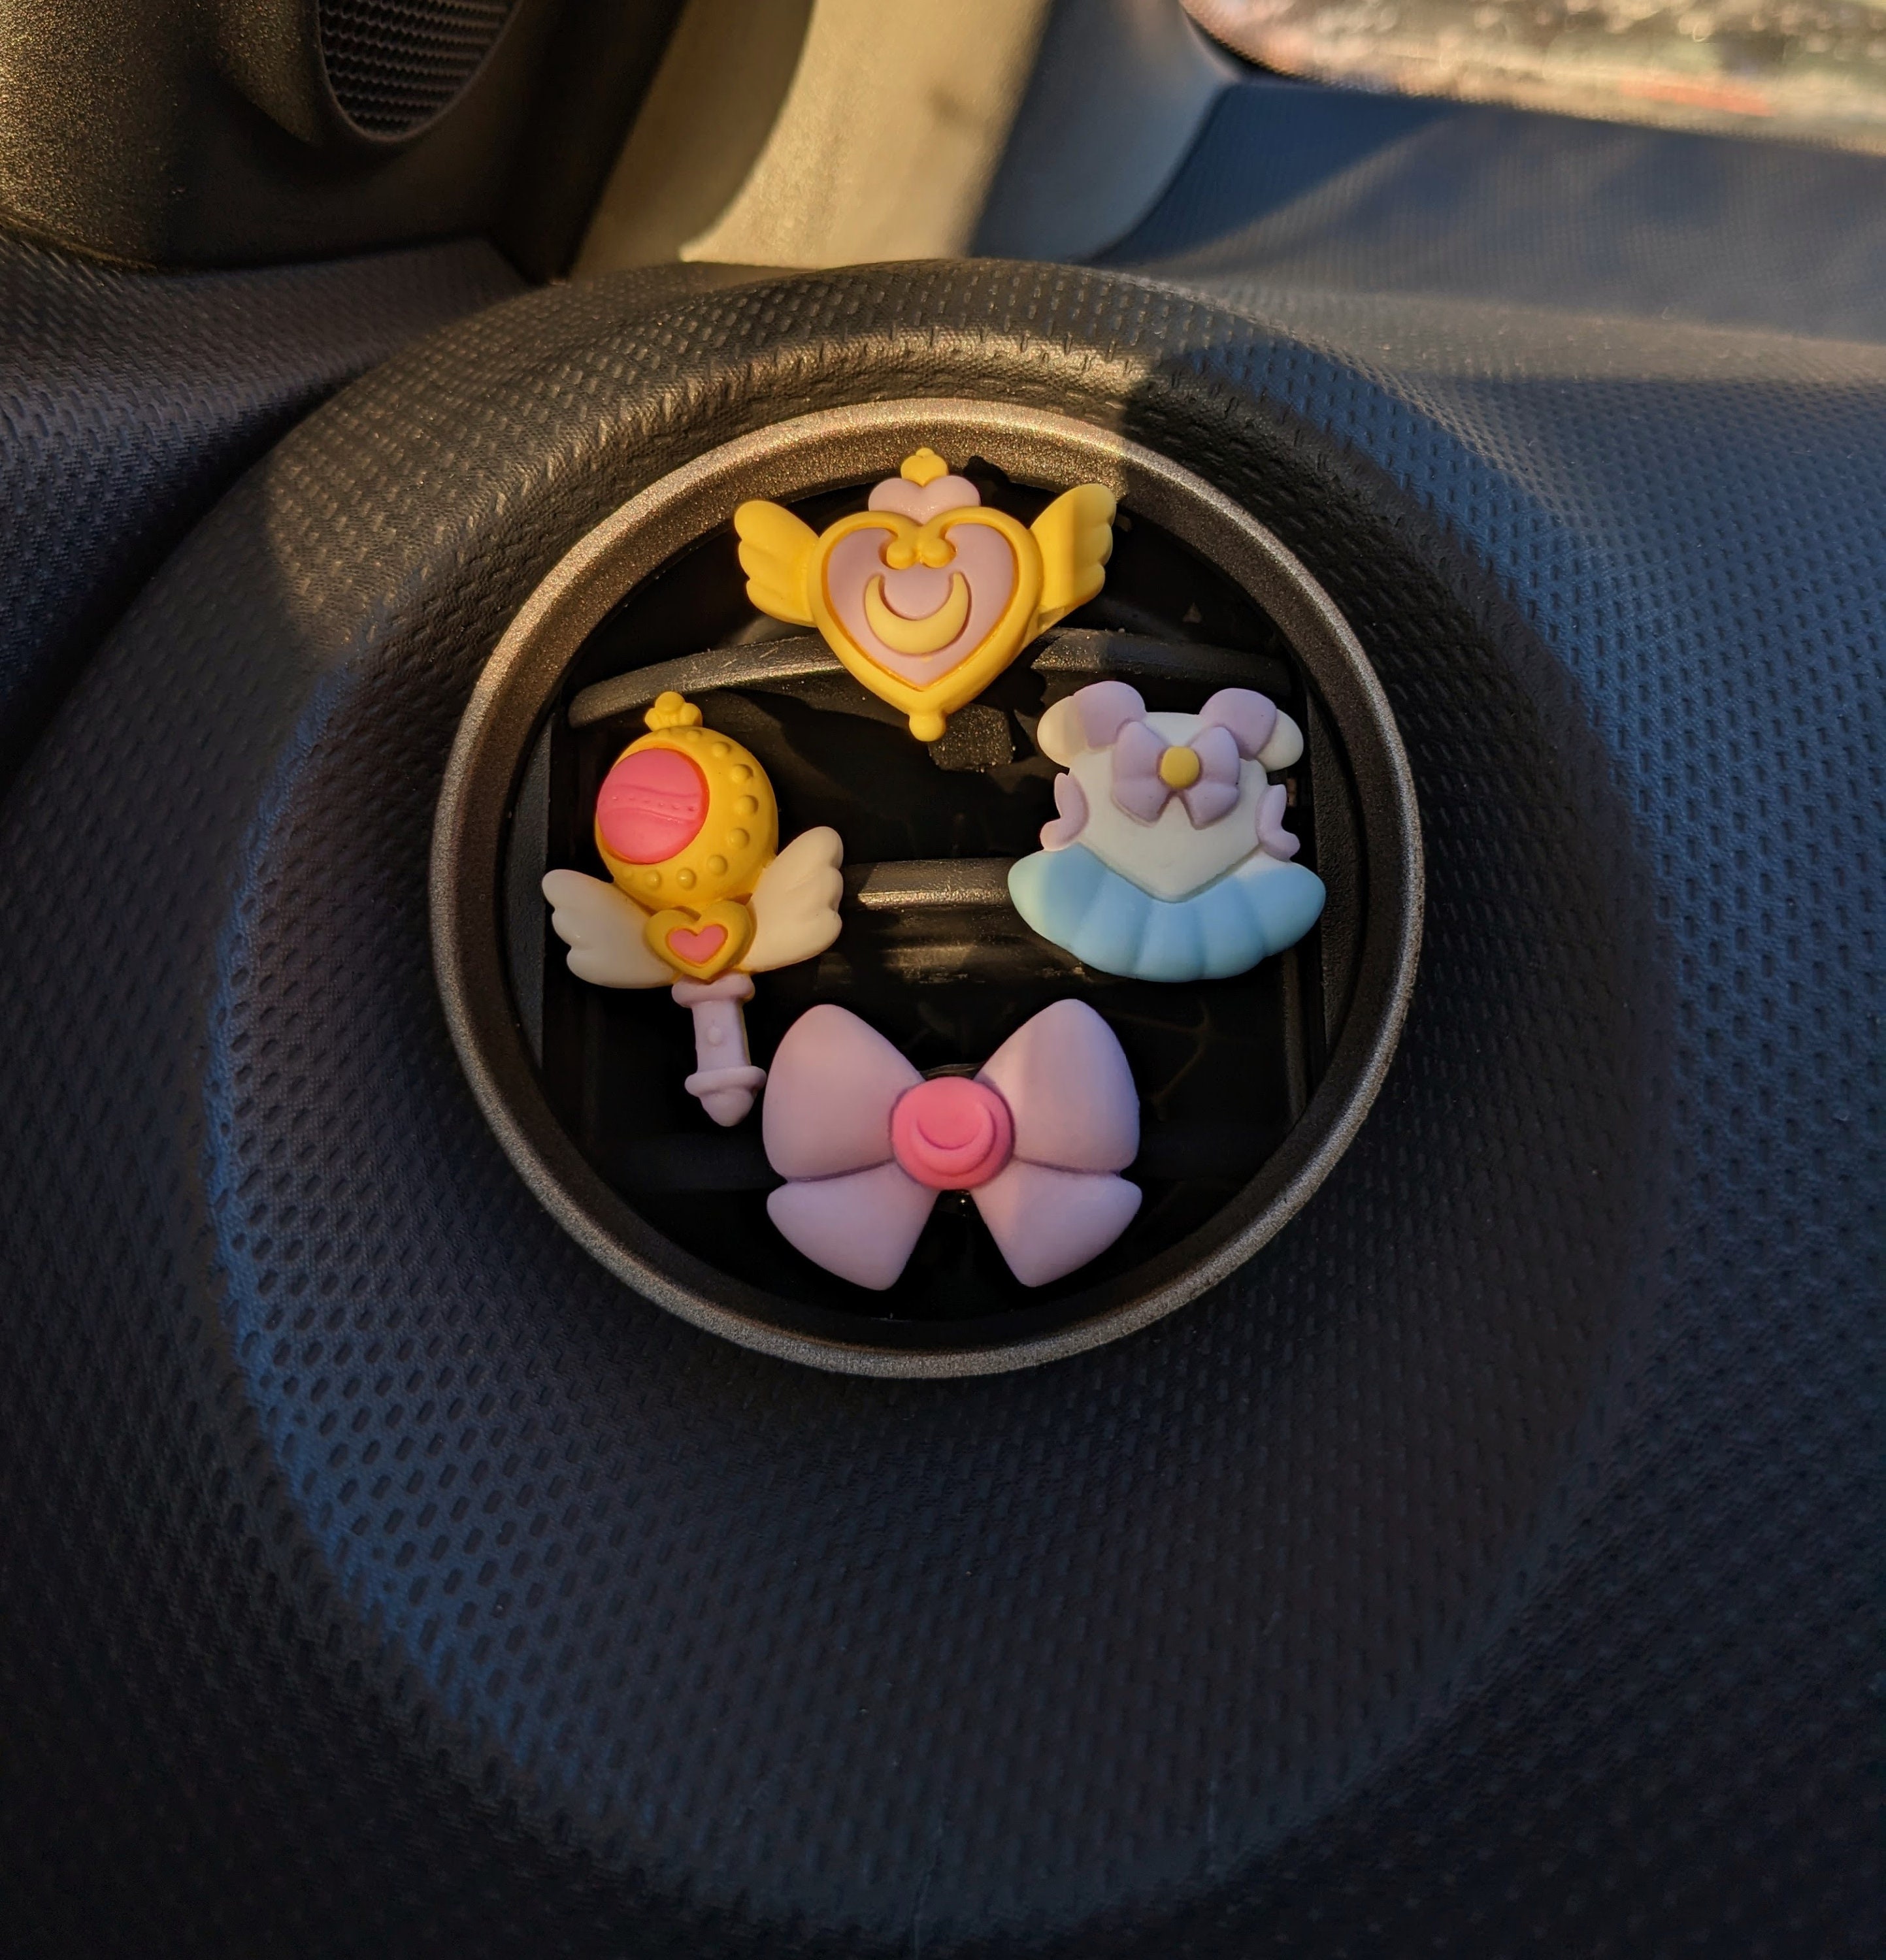 Sailor Moon Car Clip 